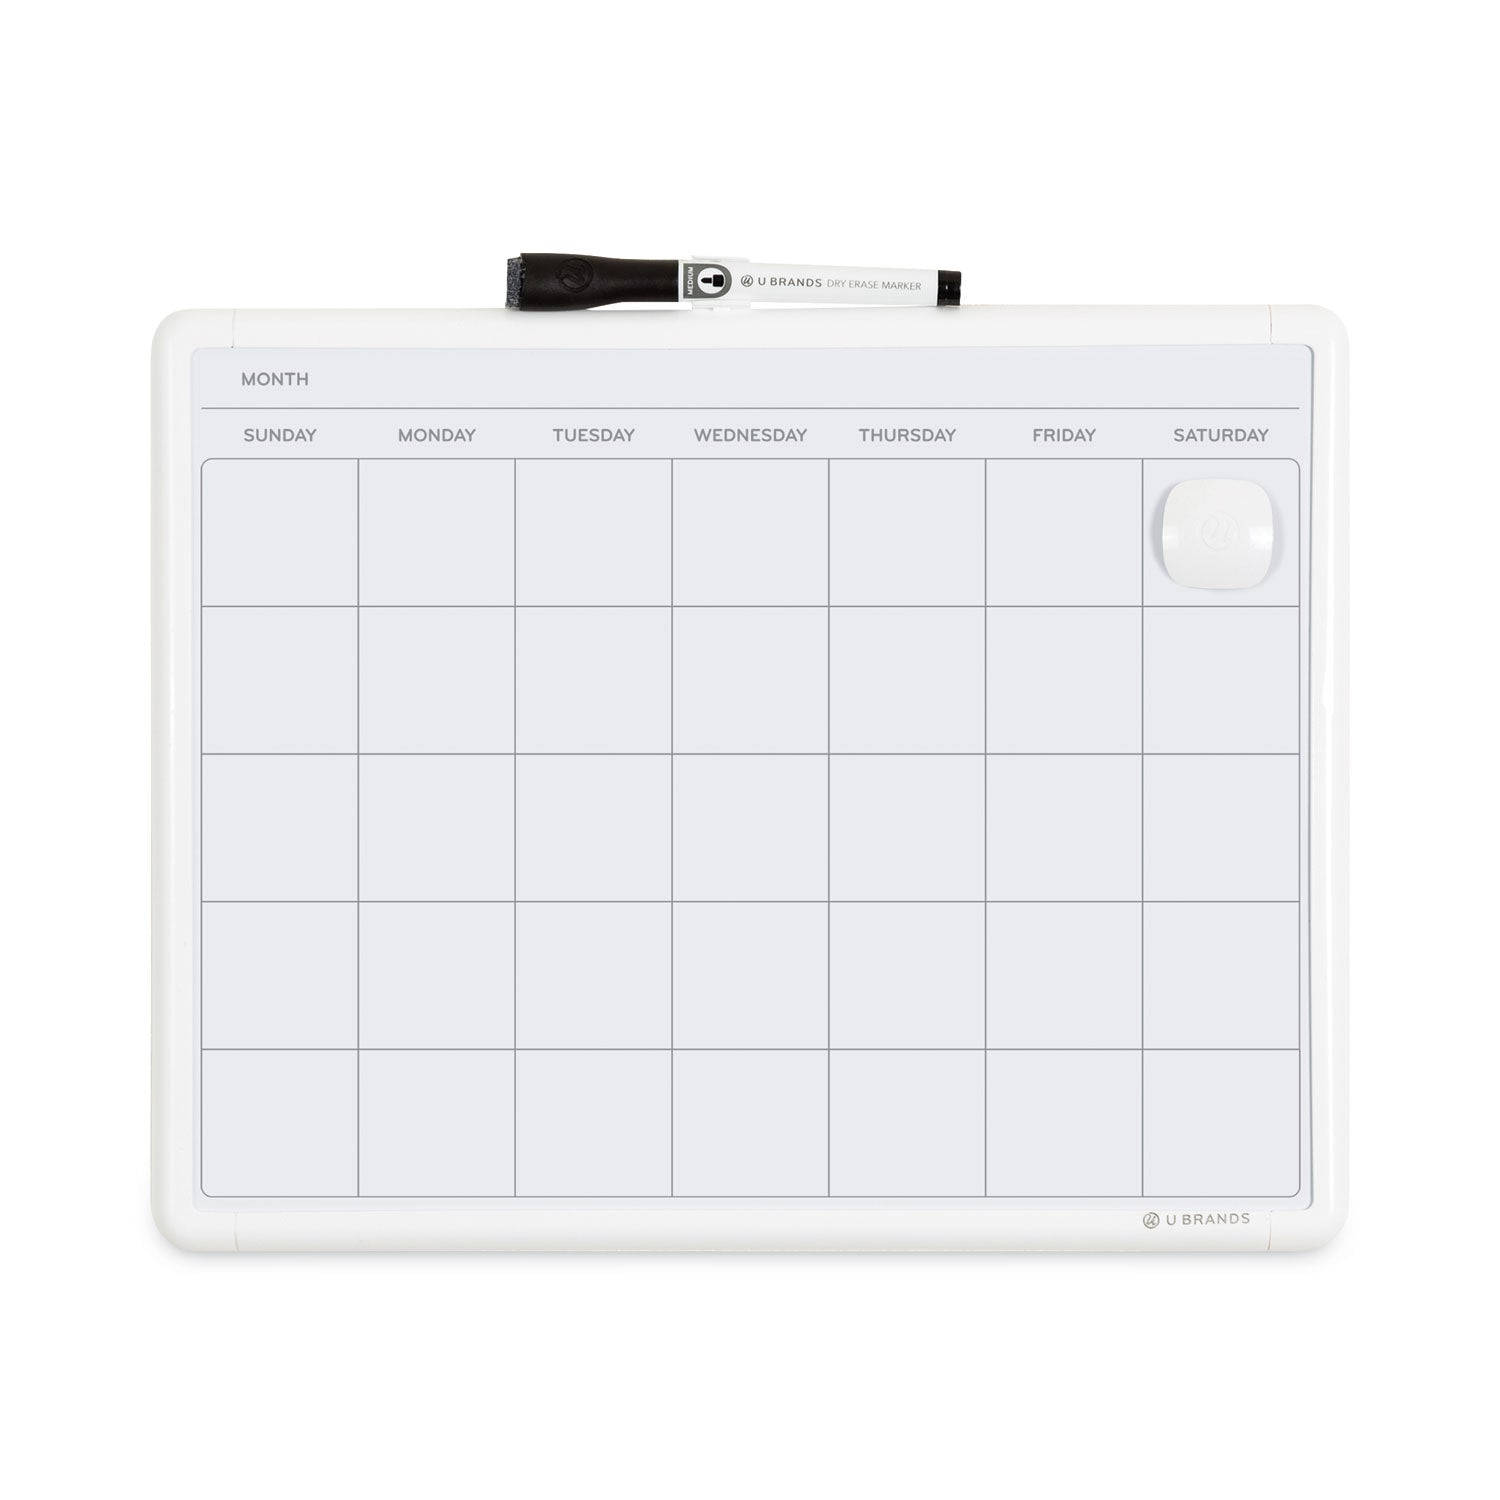 magnetic-dry-erase-monthly-calendar-14-x-1166-white-surface-white-plastic-frame_ubr260u0004 - 1